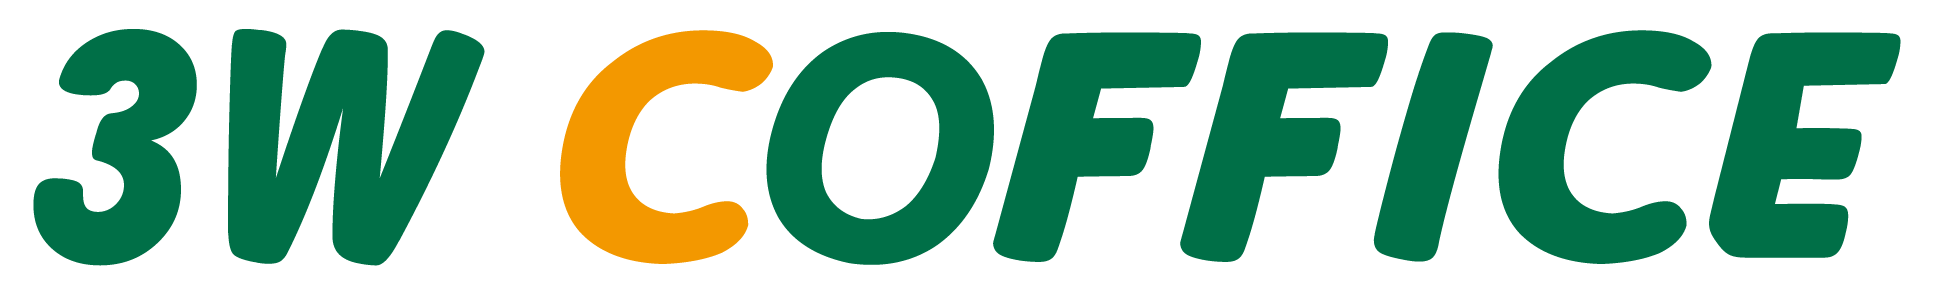 Logo-3副本.png